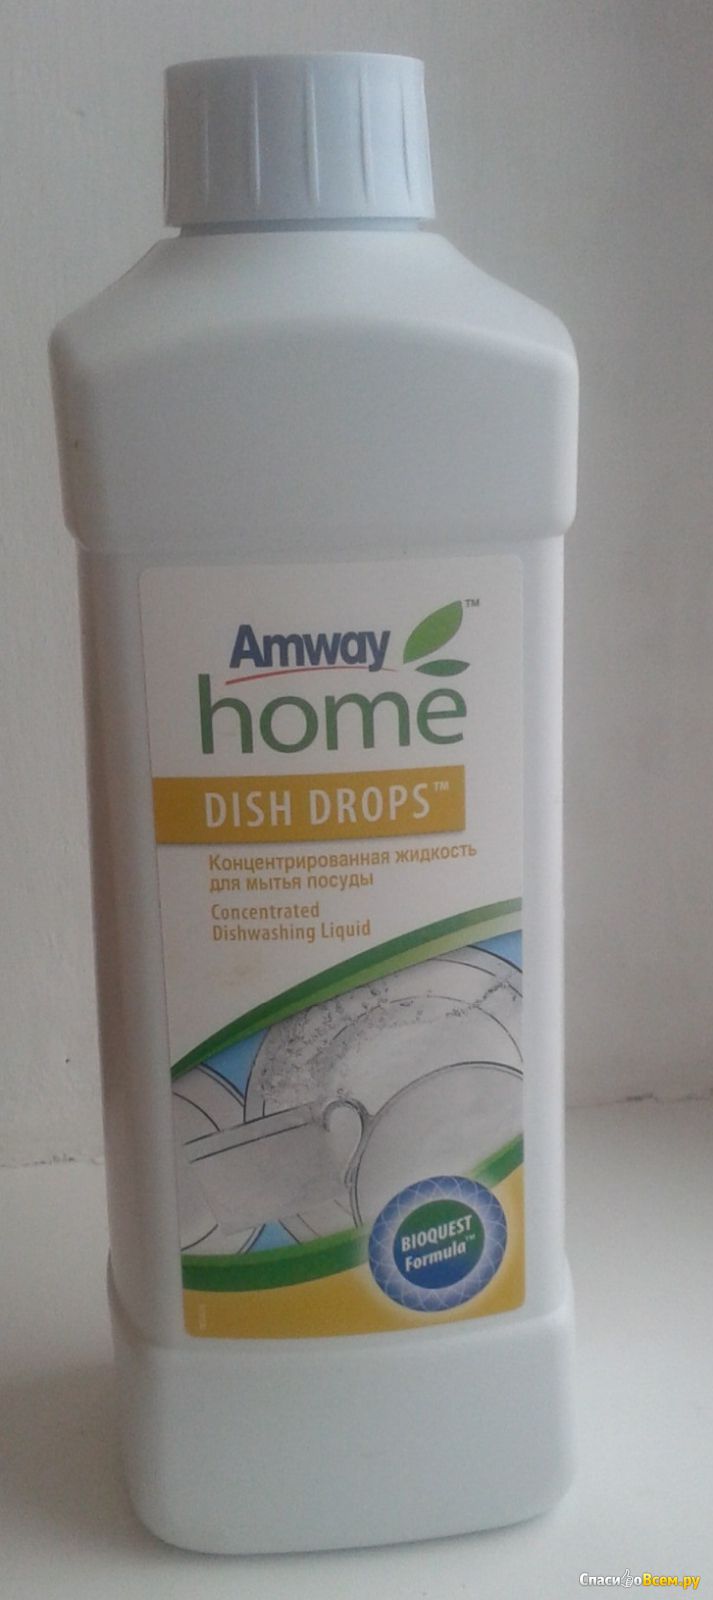 Amway dish drops. Диш Дропс Амвей. Dish Drops концентрированная жидкость для посуды. Dish DROPSTM концентрированная жидкость для мытья посуды. Диждробс Амвей.